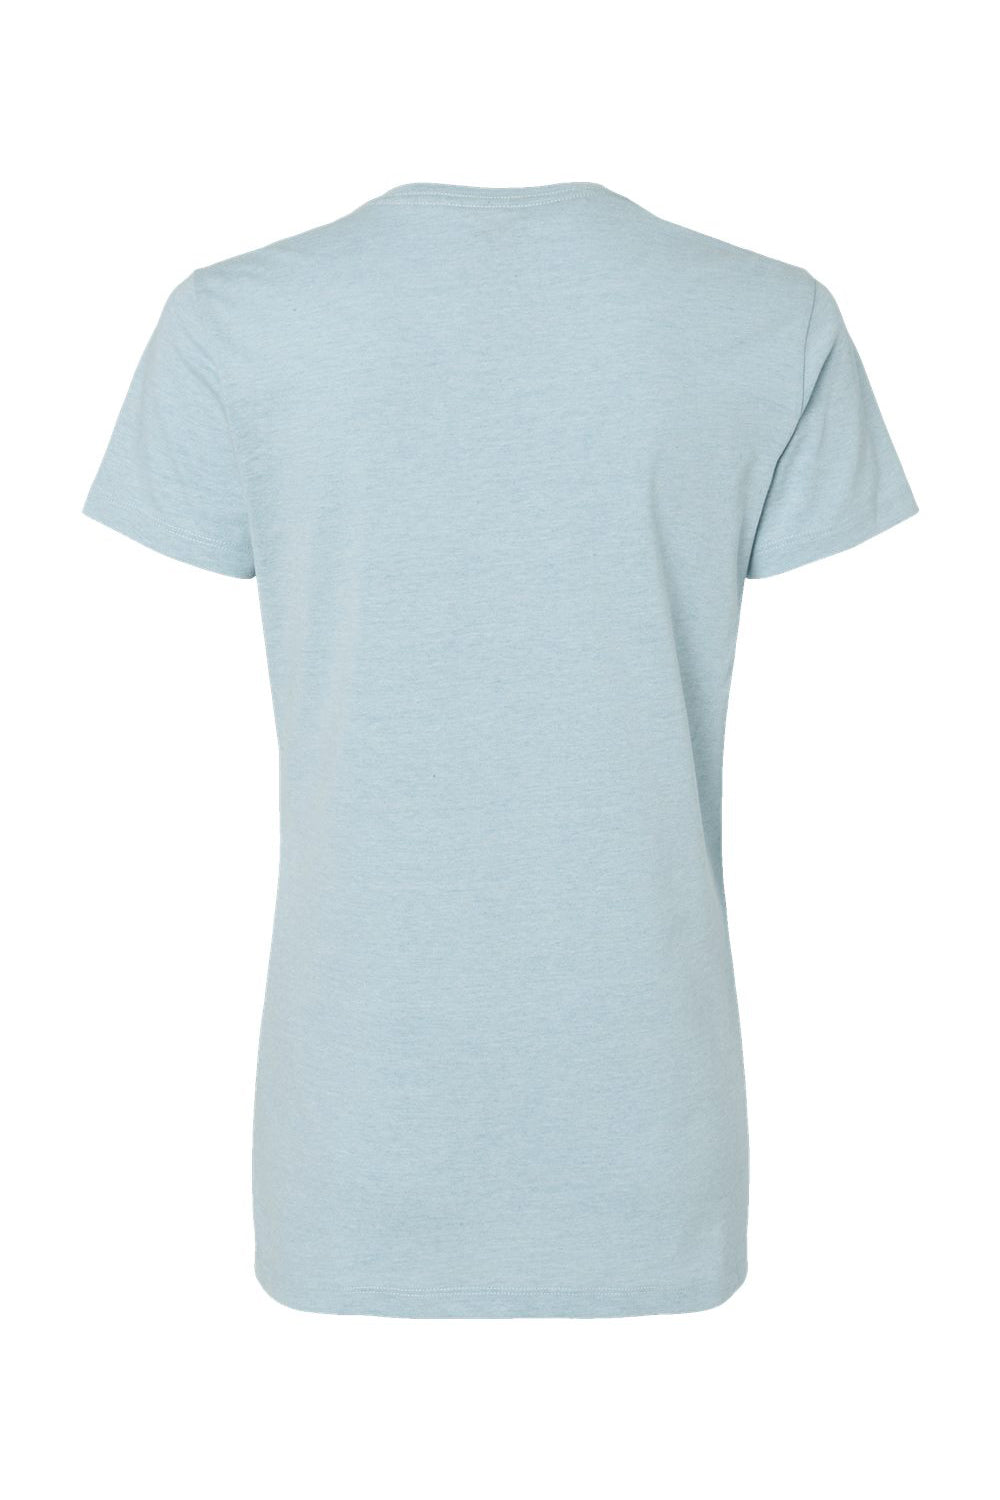 Kastlfel 2011 Womens RecycledSoft Short Sleeve V-Neck T-Shirt Ice Blue Flat Back